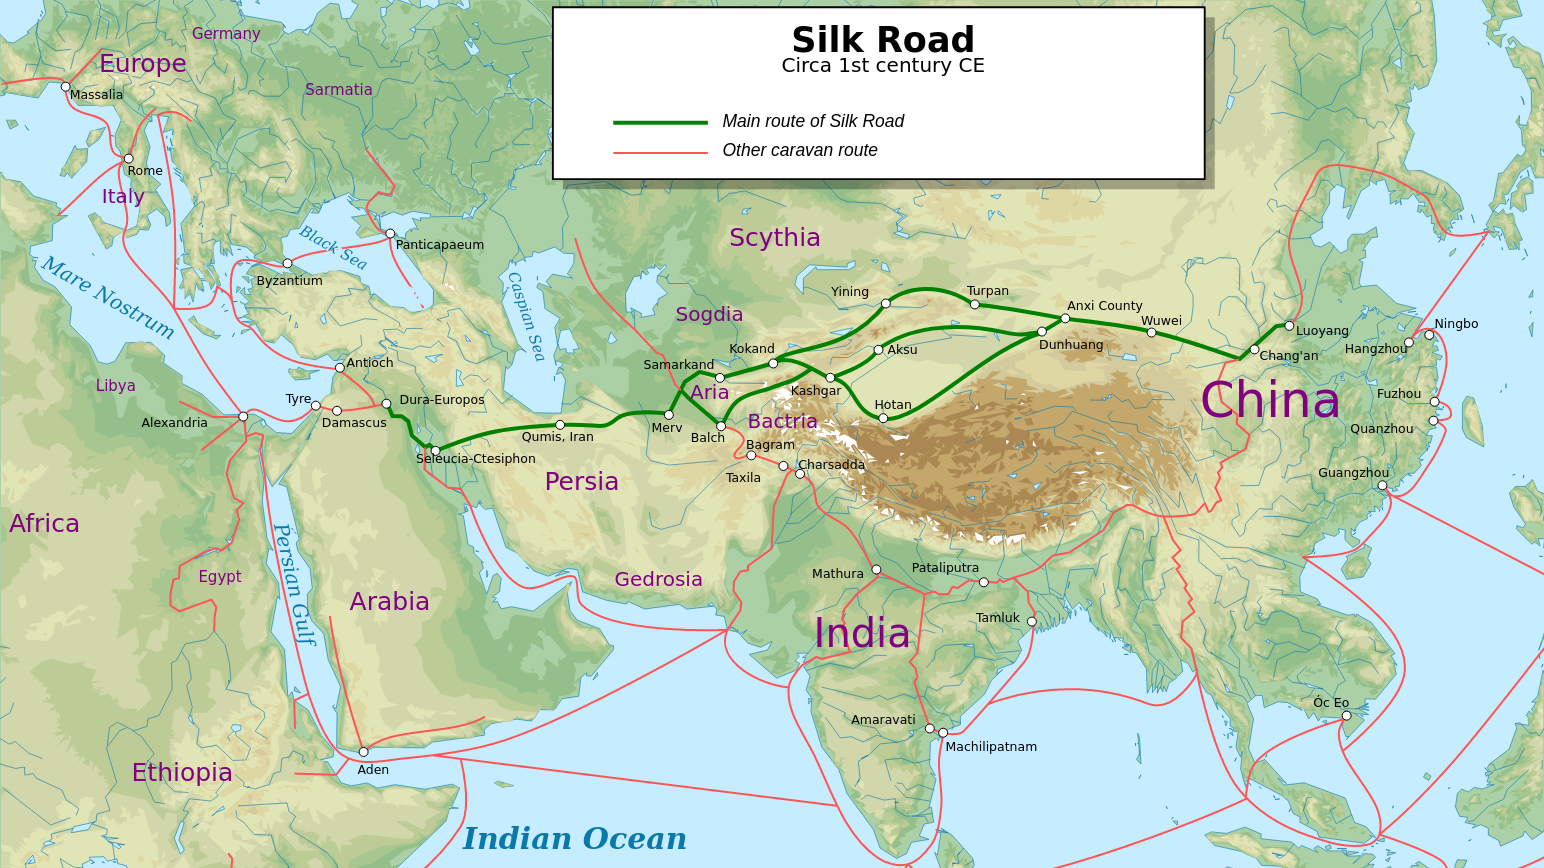 Ancient Silk Road